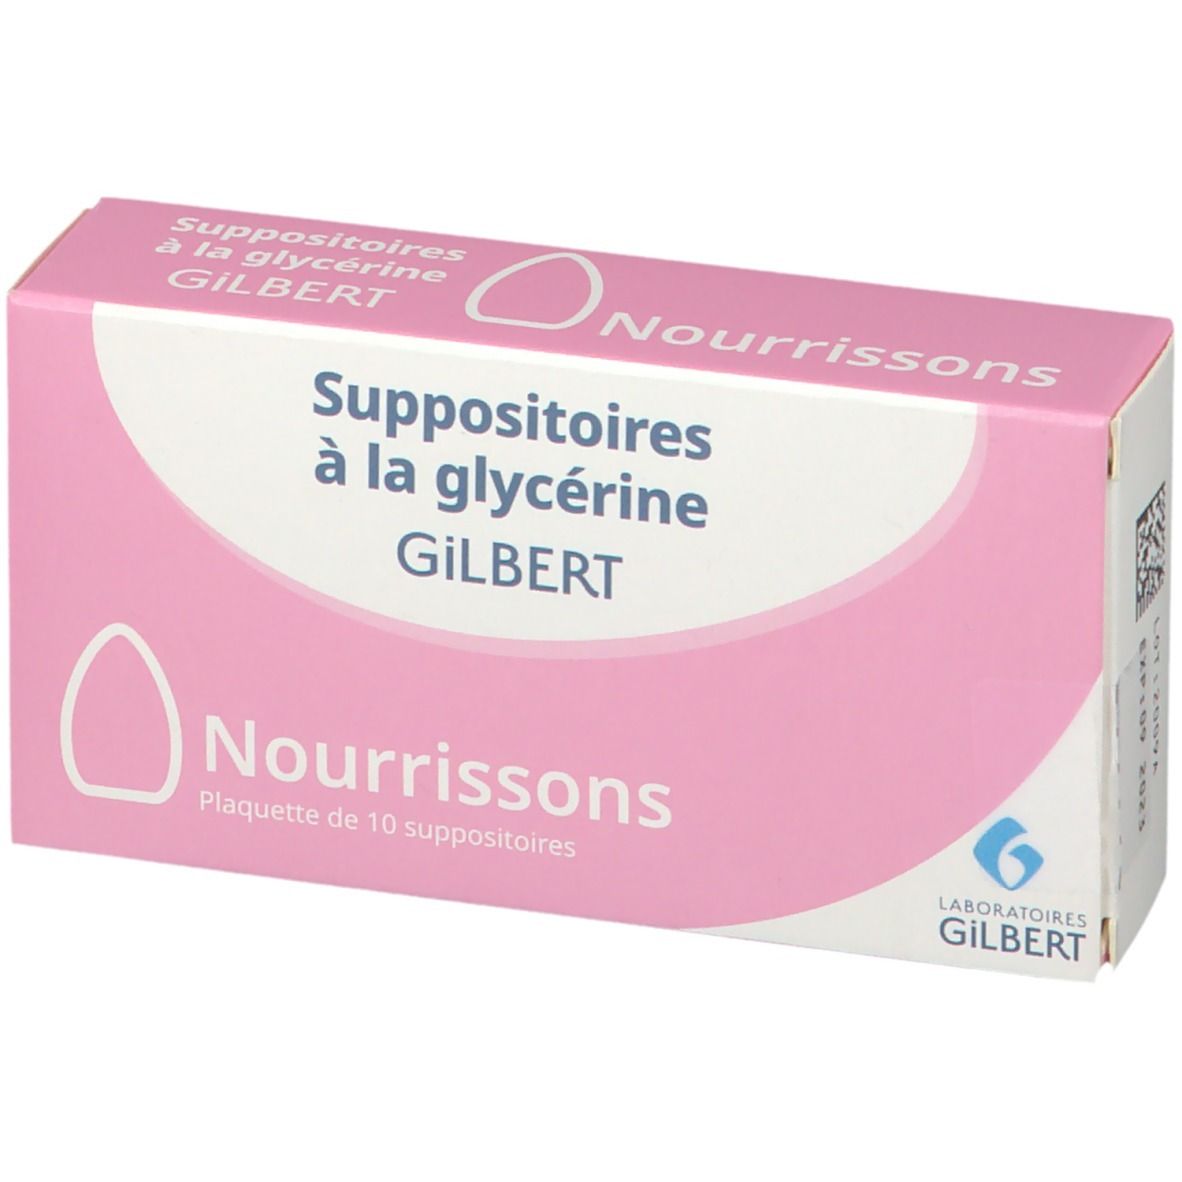 Suppositoires A La Glycérine - Nourissons - Boite de 10 - Gilbert